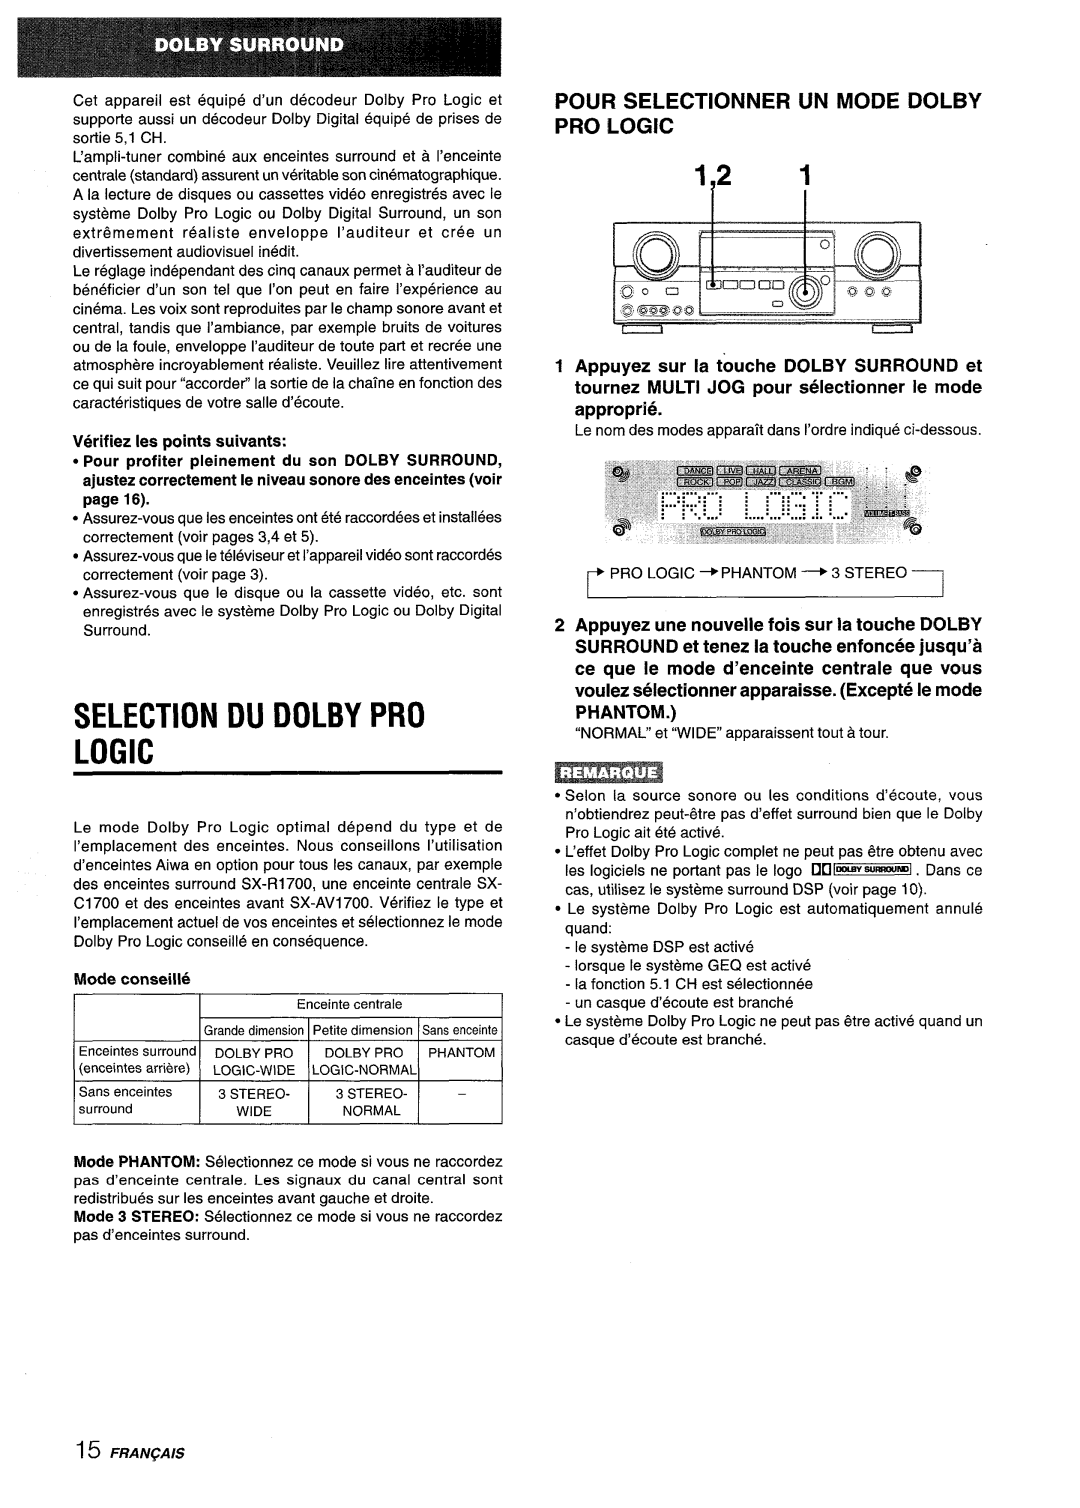 Aiwa AV-D35 manual Selection Du Dolby Pro Logic, Pour Selectionner Un Mode Dolby Pro Logic, approprie 